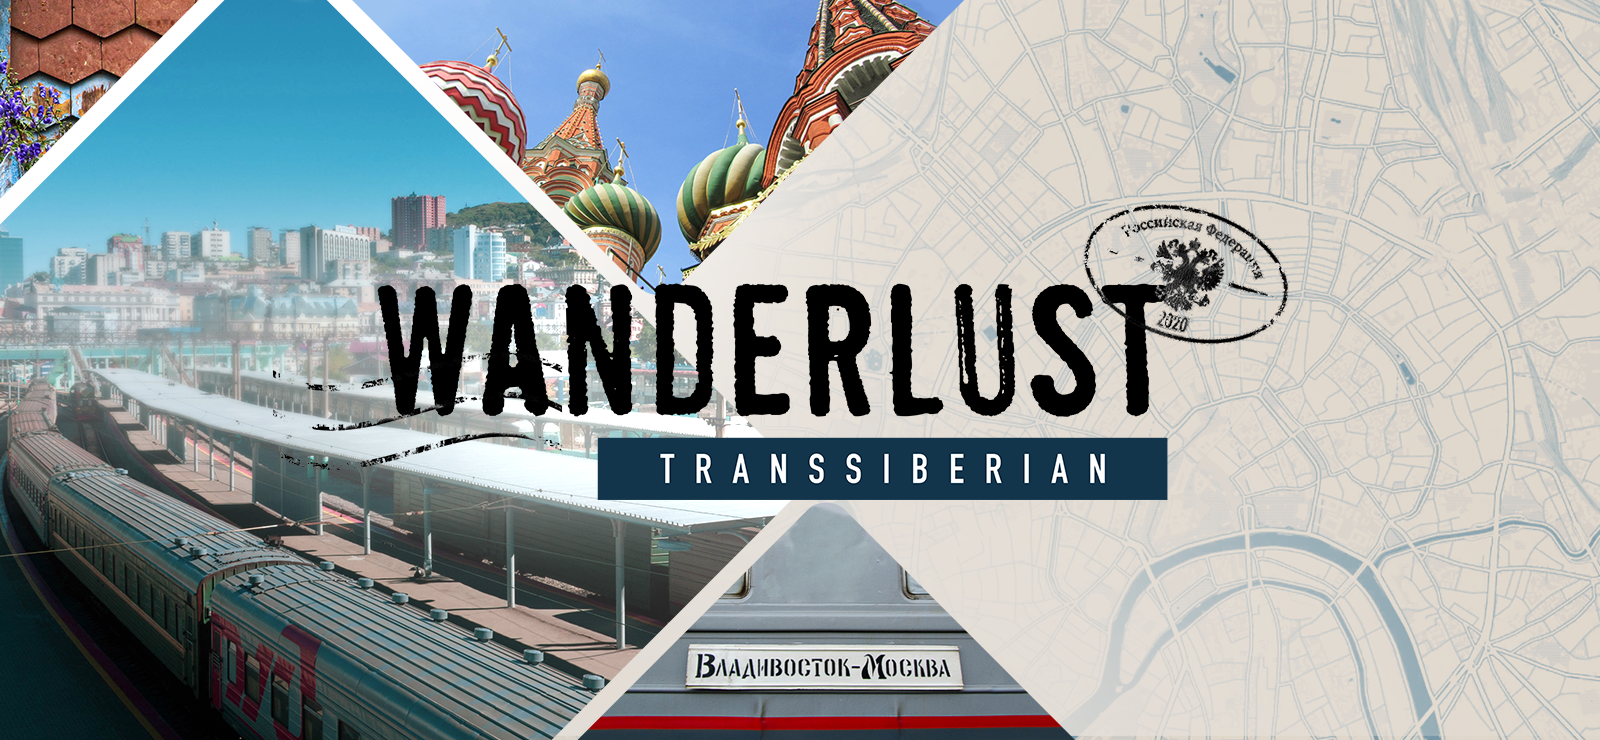 Wanderlust: Transsiberian